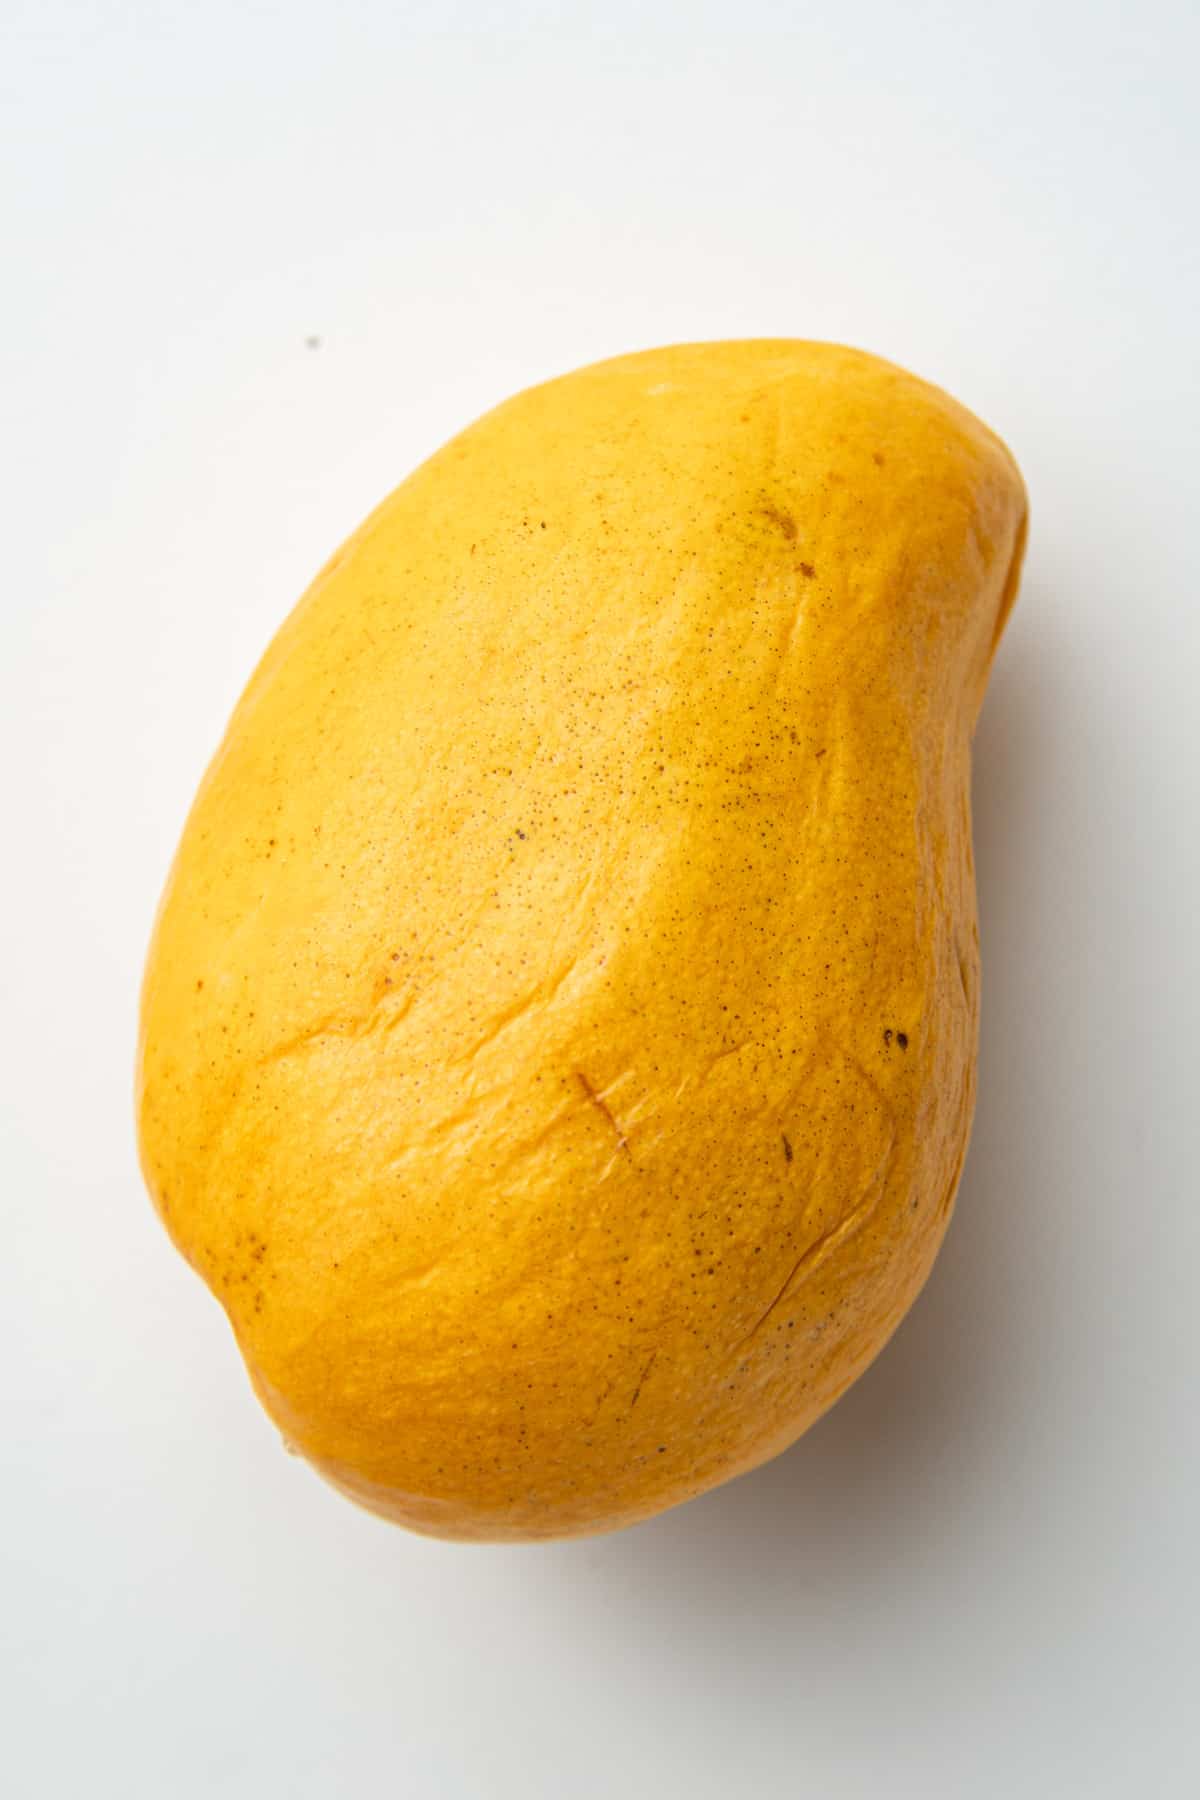 Ripe Ataulfo mango on a white surface.